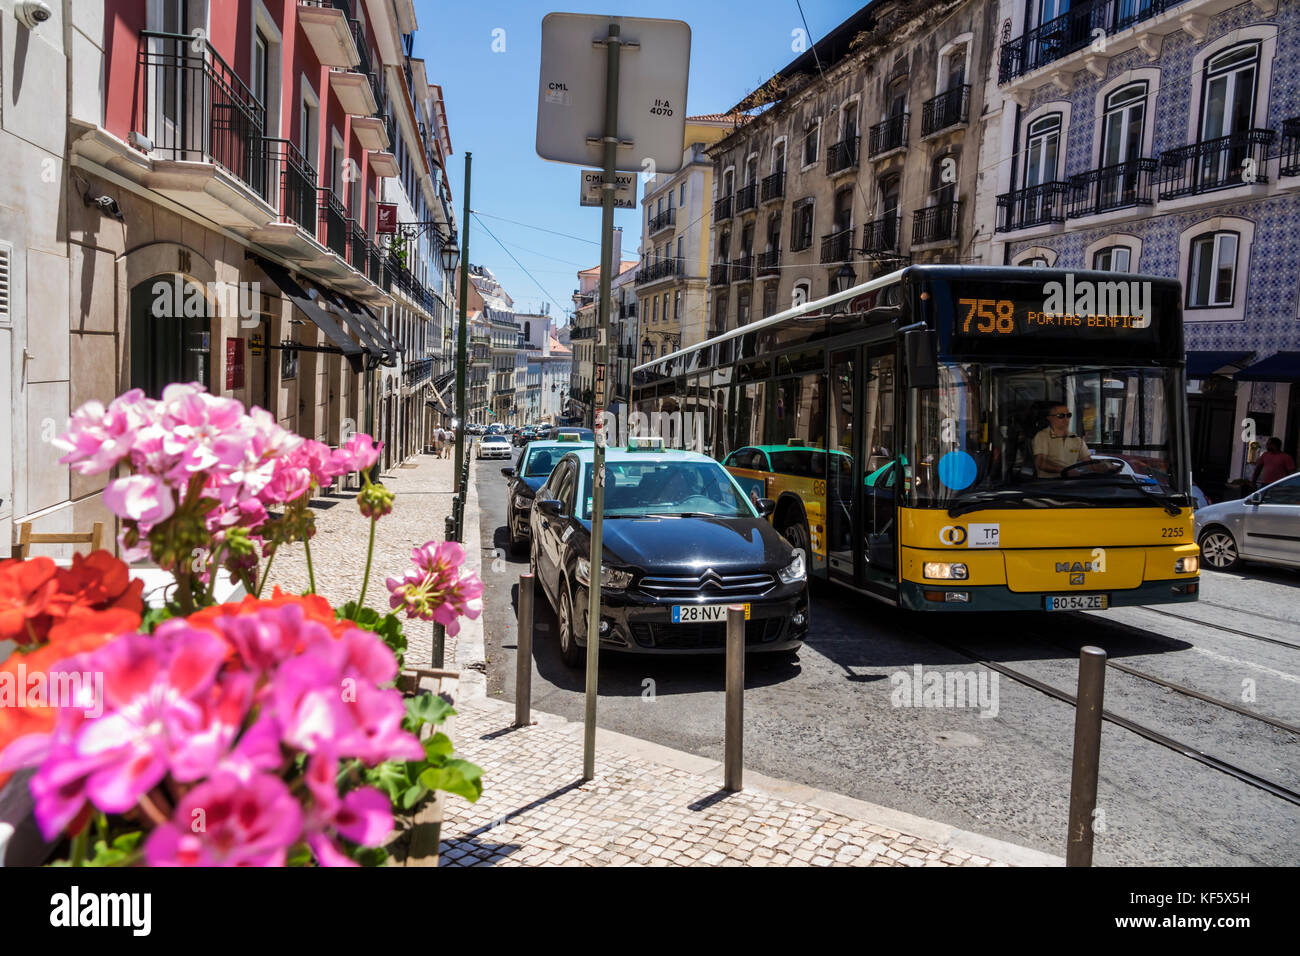 Lisbon Portugal,Bairro Alto,Rua da Misericordia,street scene,flowers,geraniums,taxi stand,bus,city skyline,residential apartment buildings,Hispanic,im Stock Photo